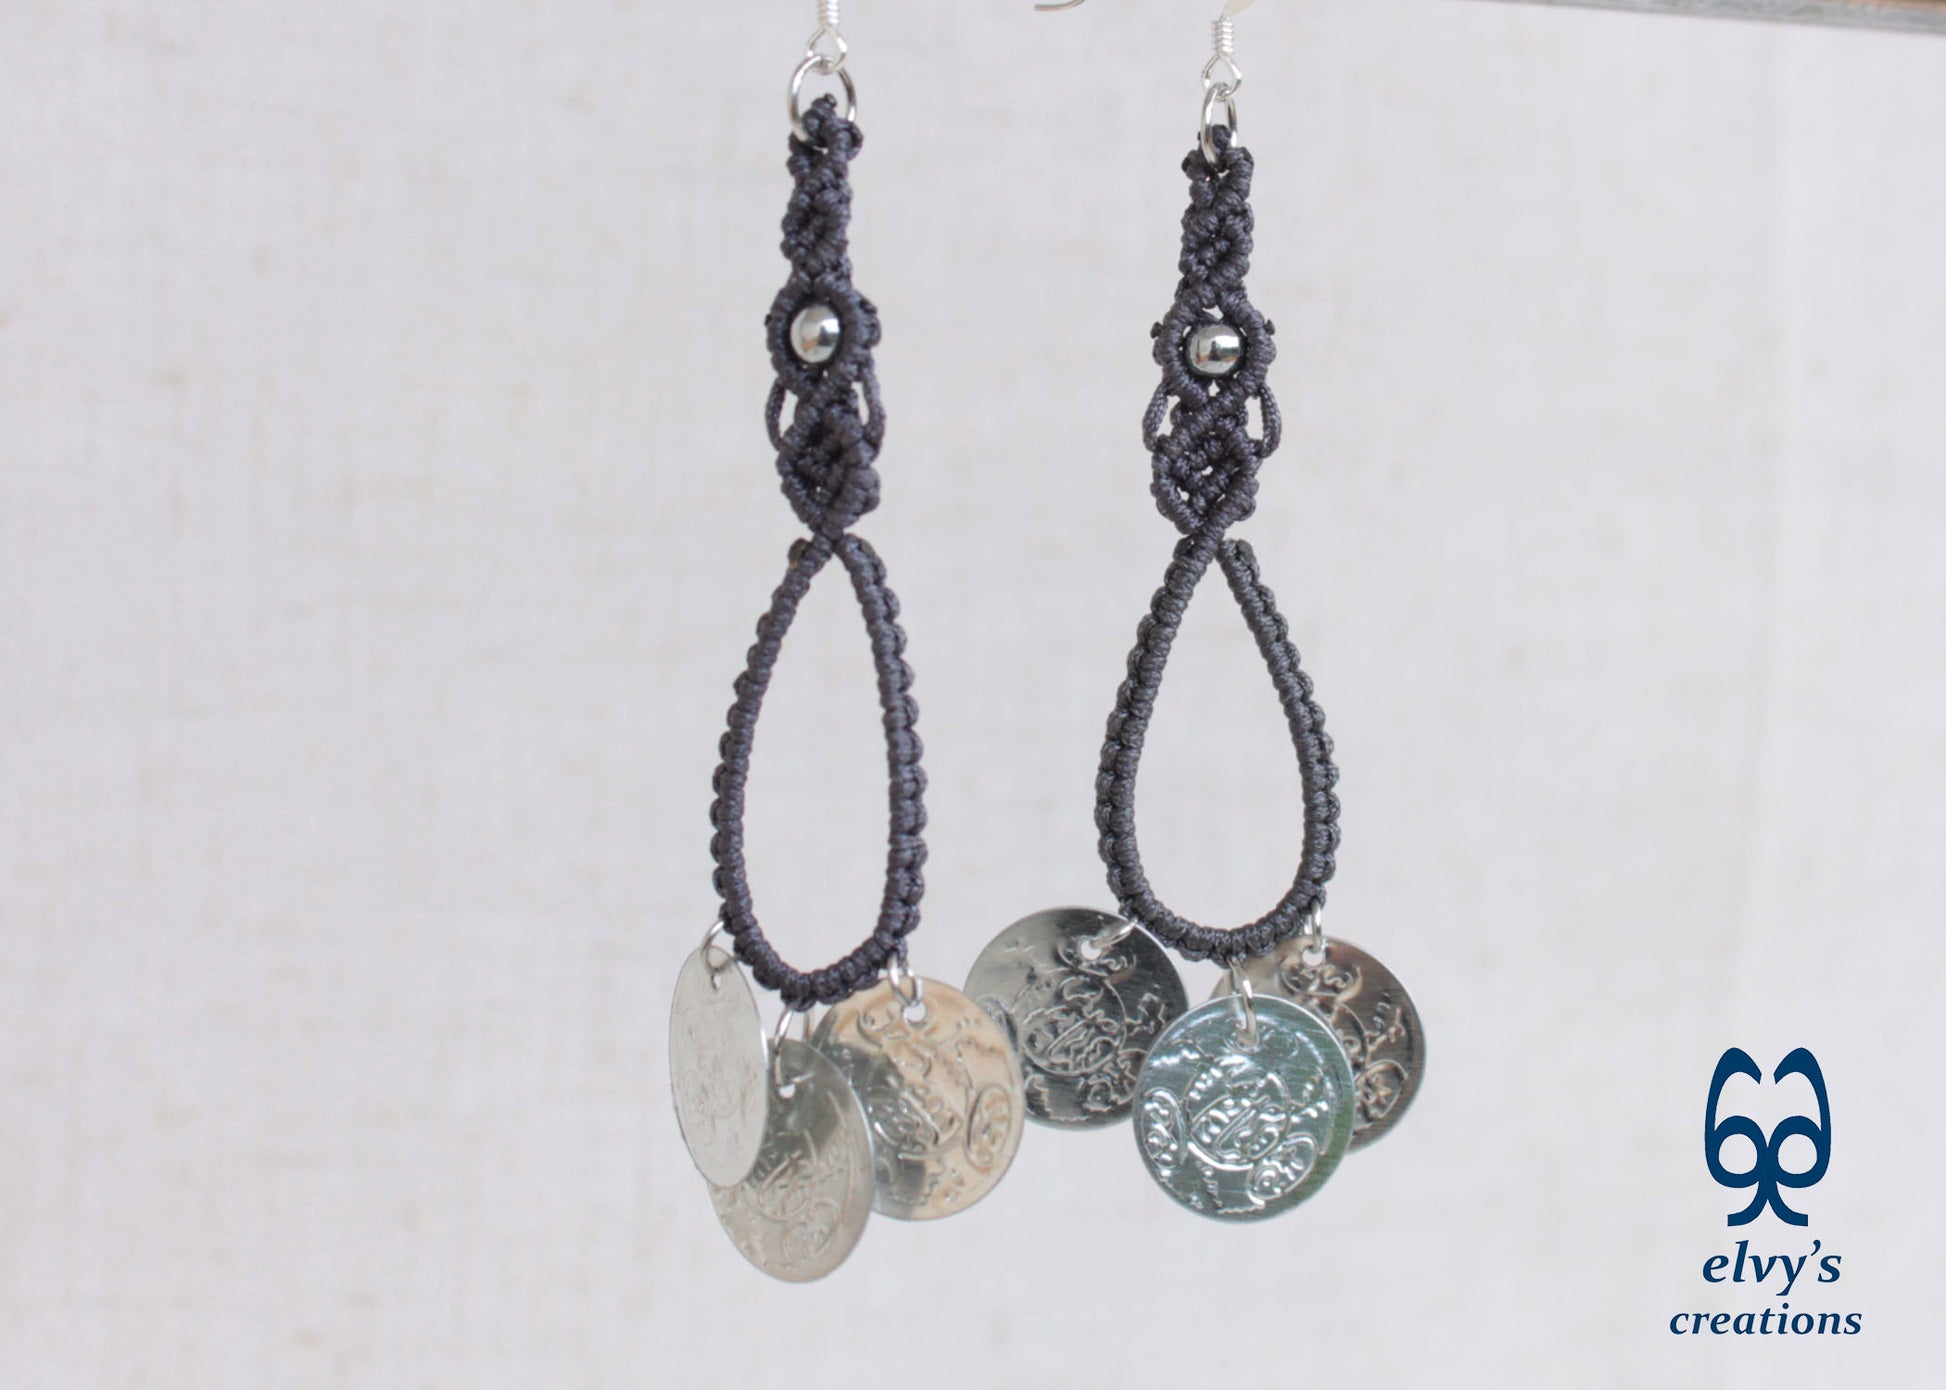 Gray Macrame Earrings with Hematite Gemstones Gypsy Earrings with Coins Boho Dangle with Coins, Μακραμέ Σκουλαρίκια με Φλουριά και Κρυστάλλους Αιματίτη